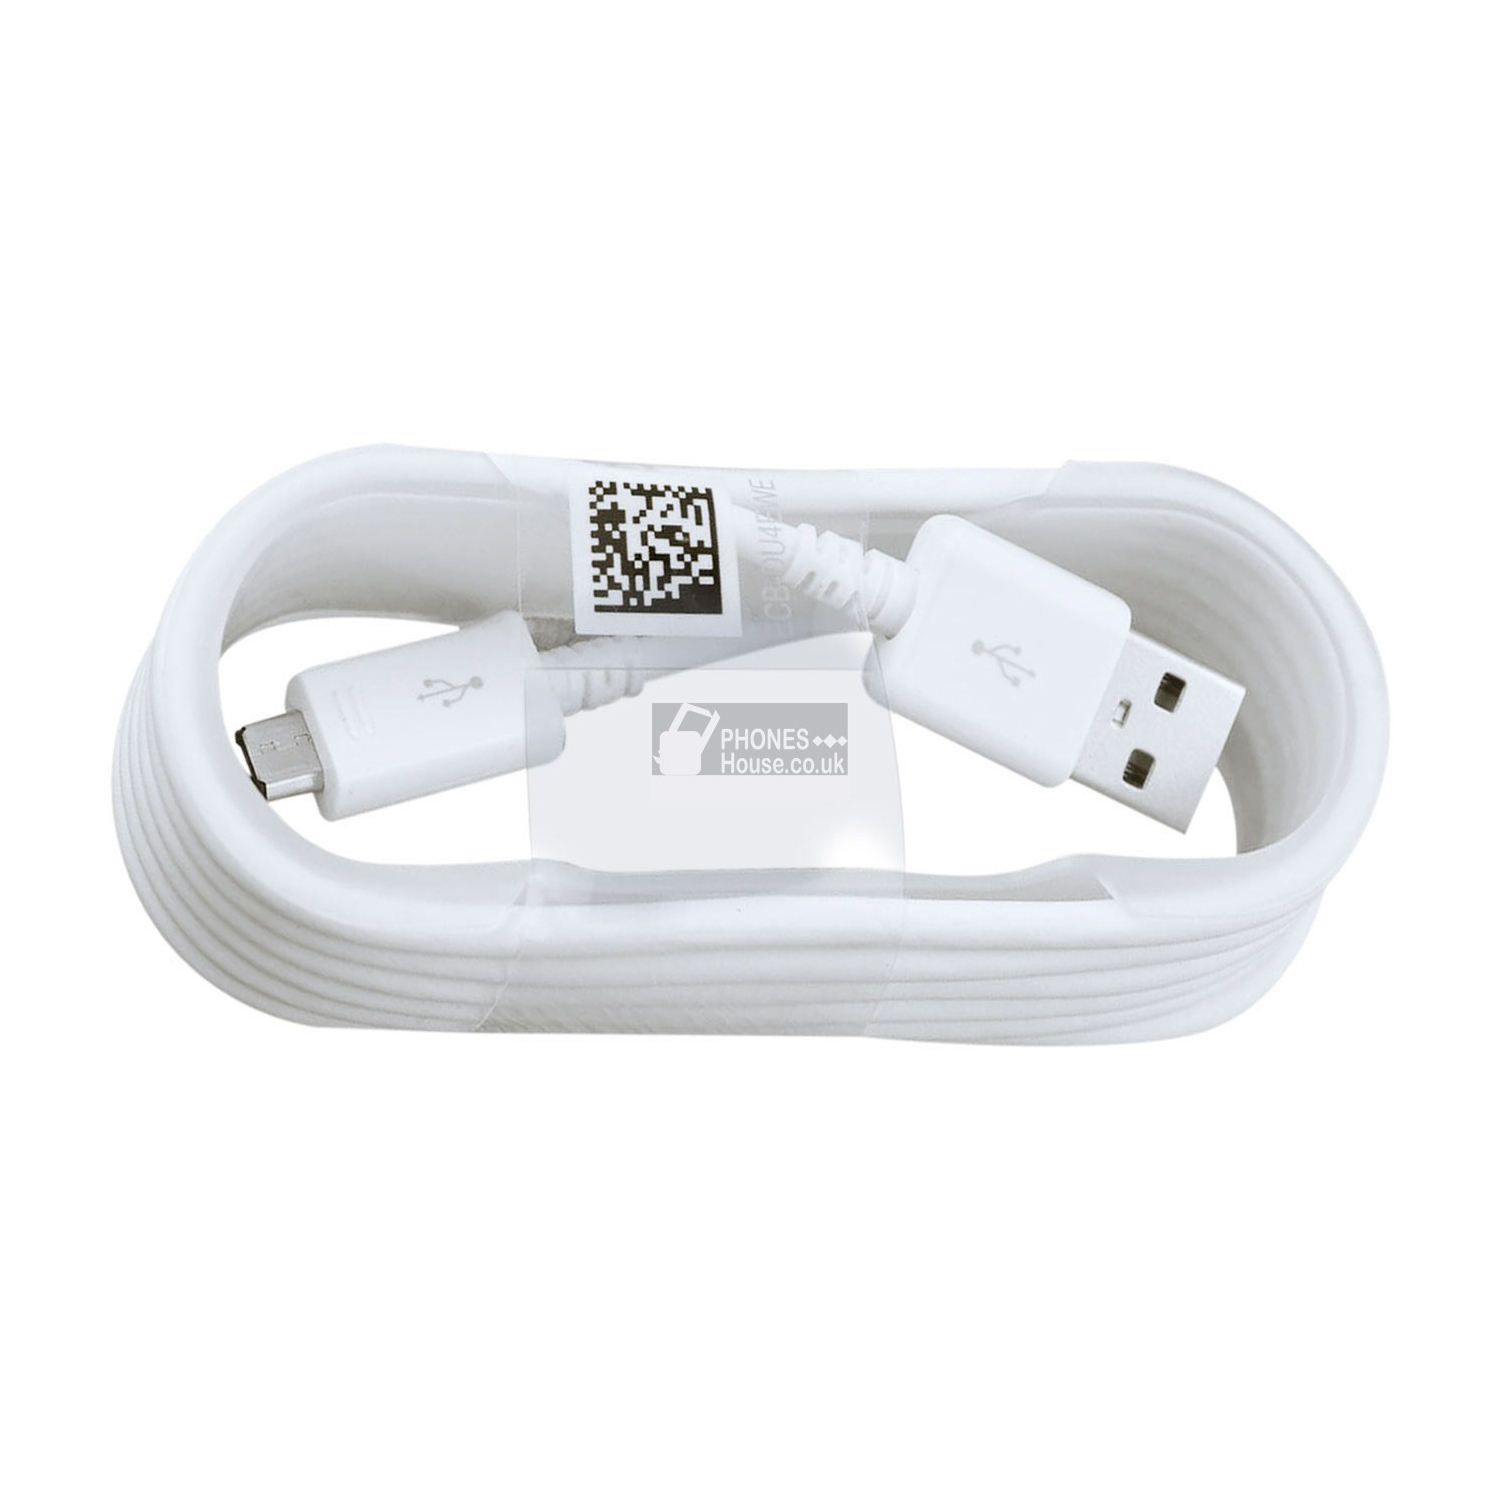 Samsung 4-Ft. Mini Micro Fast USB Data Cable for Samsung Phones - DG925UWZ